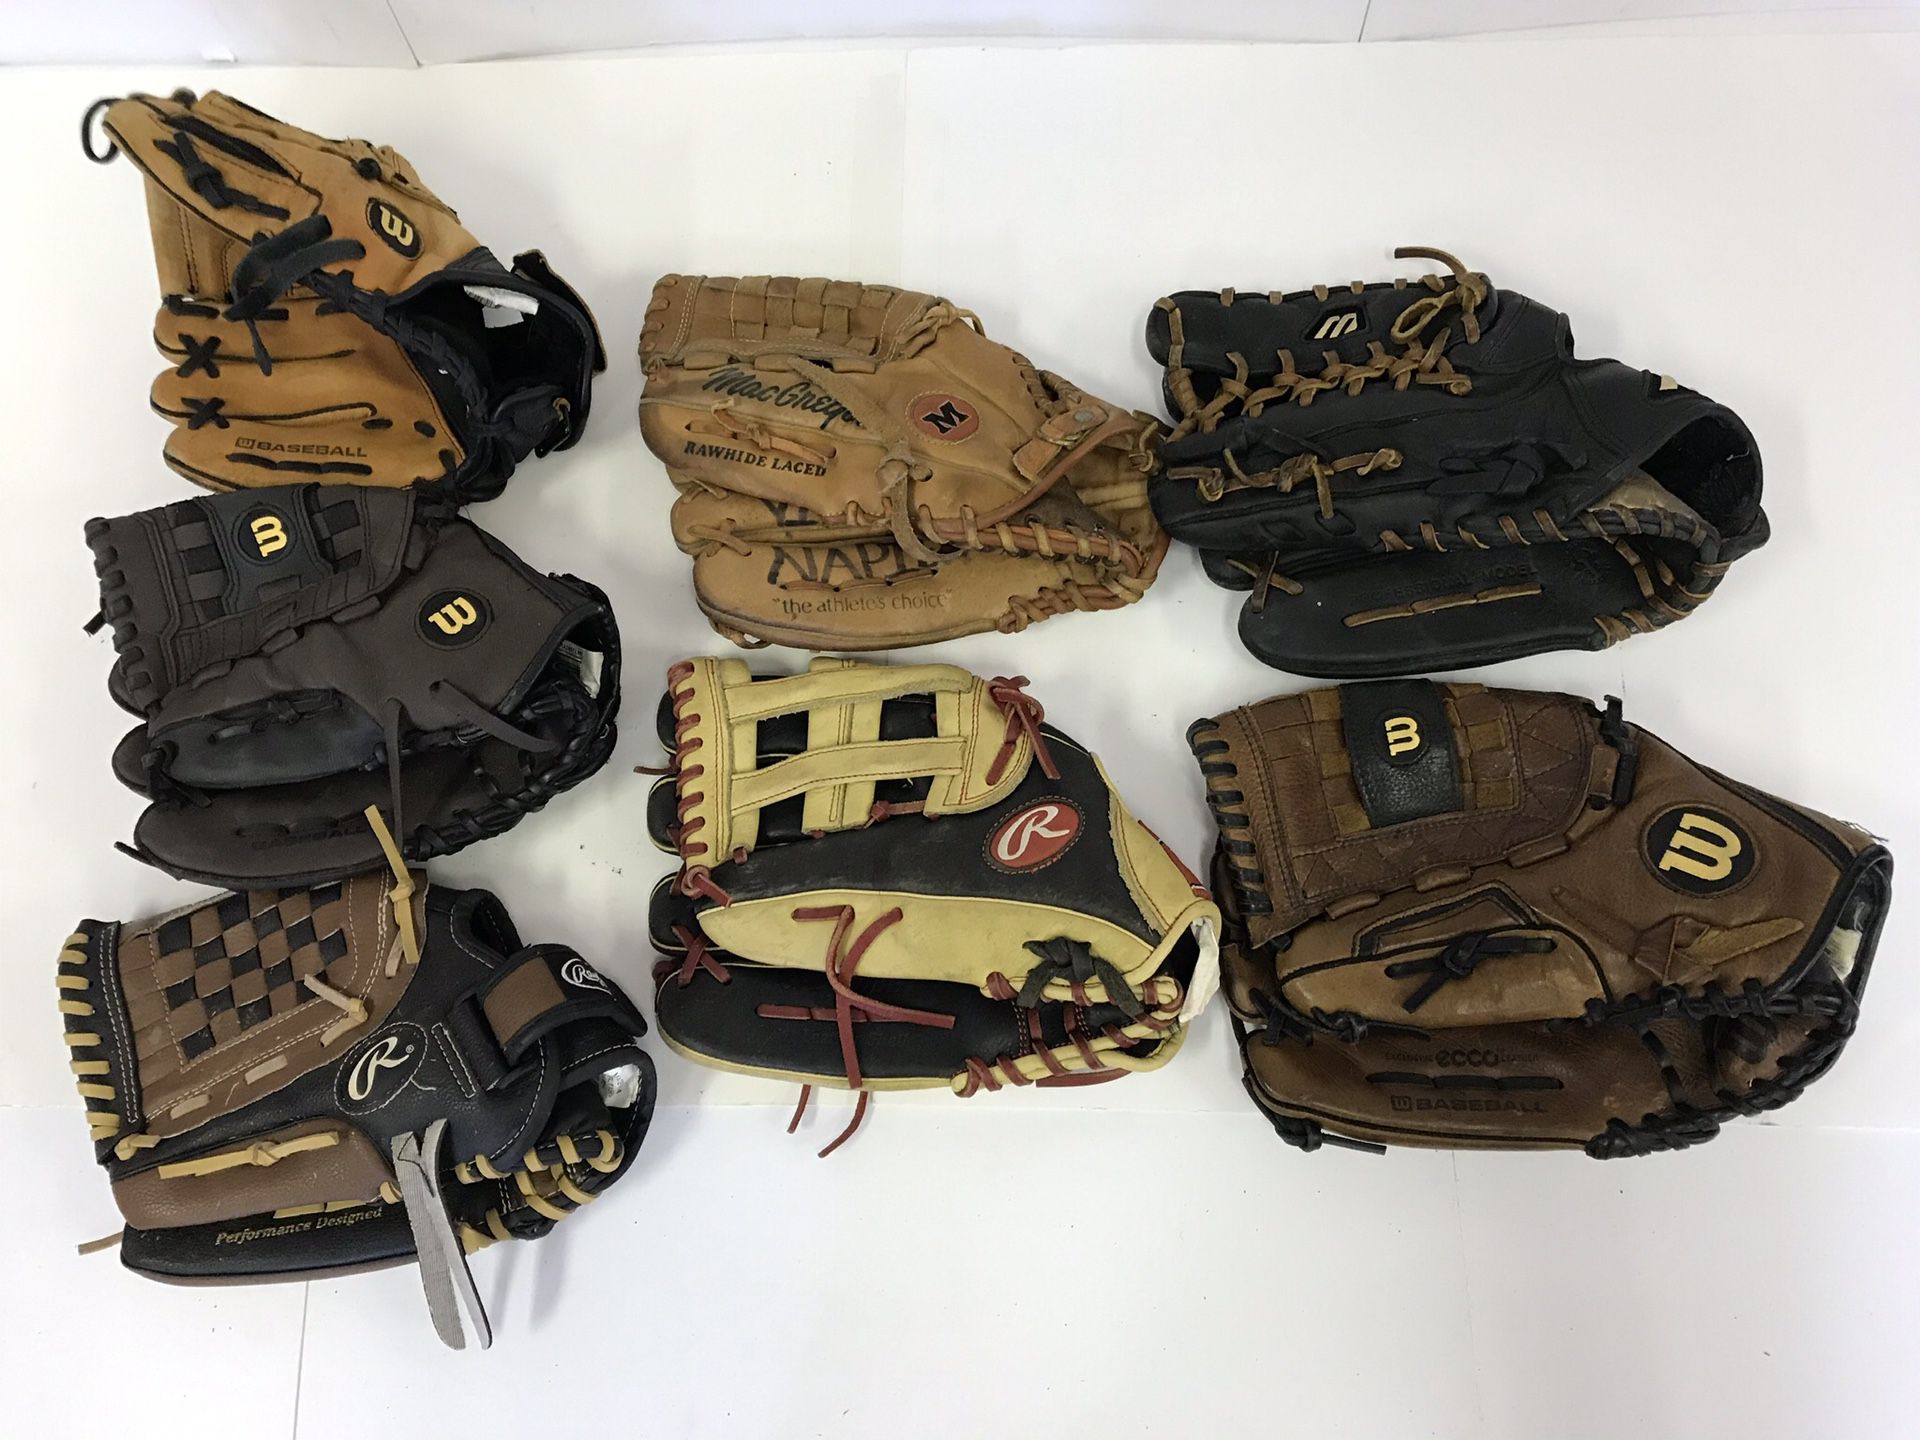 Discounted Lefty Baseball Gloves ($20-$45)